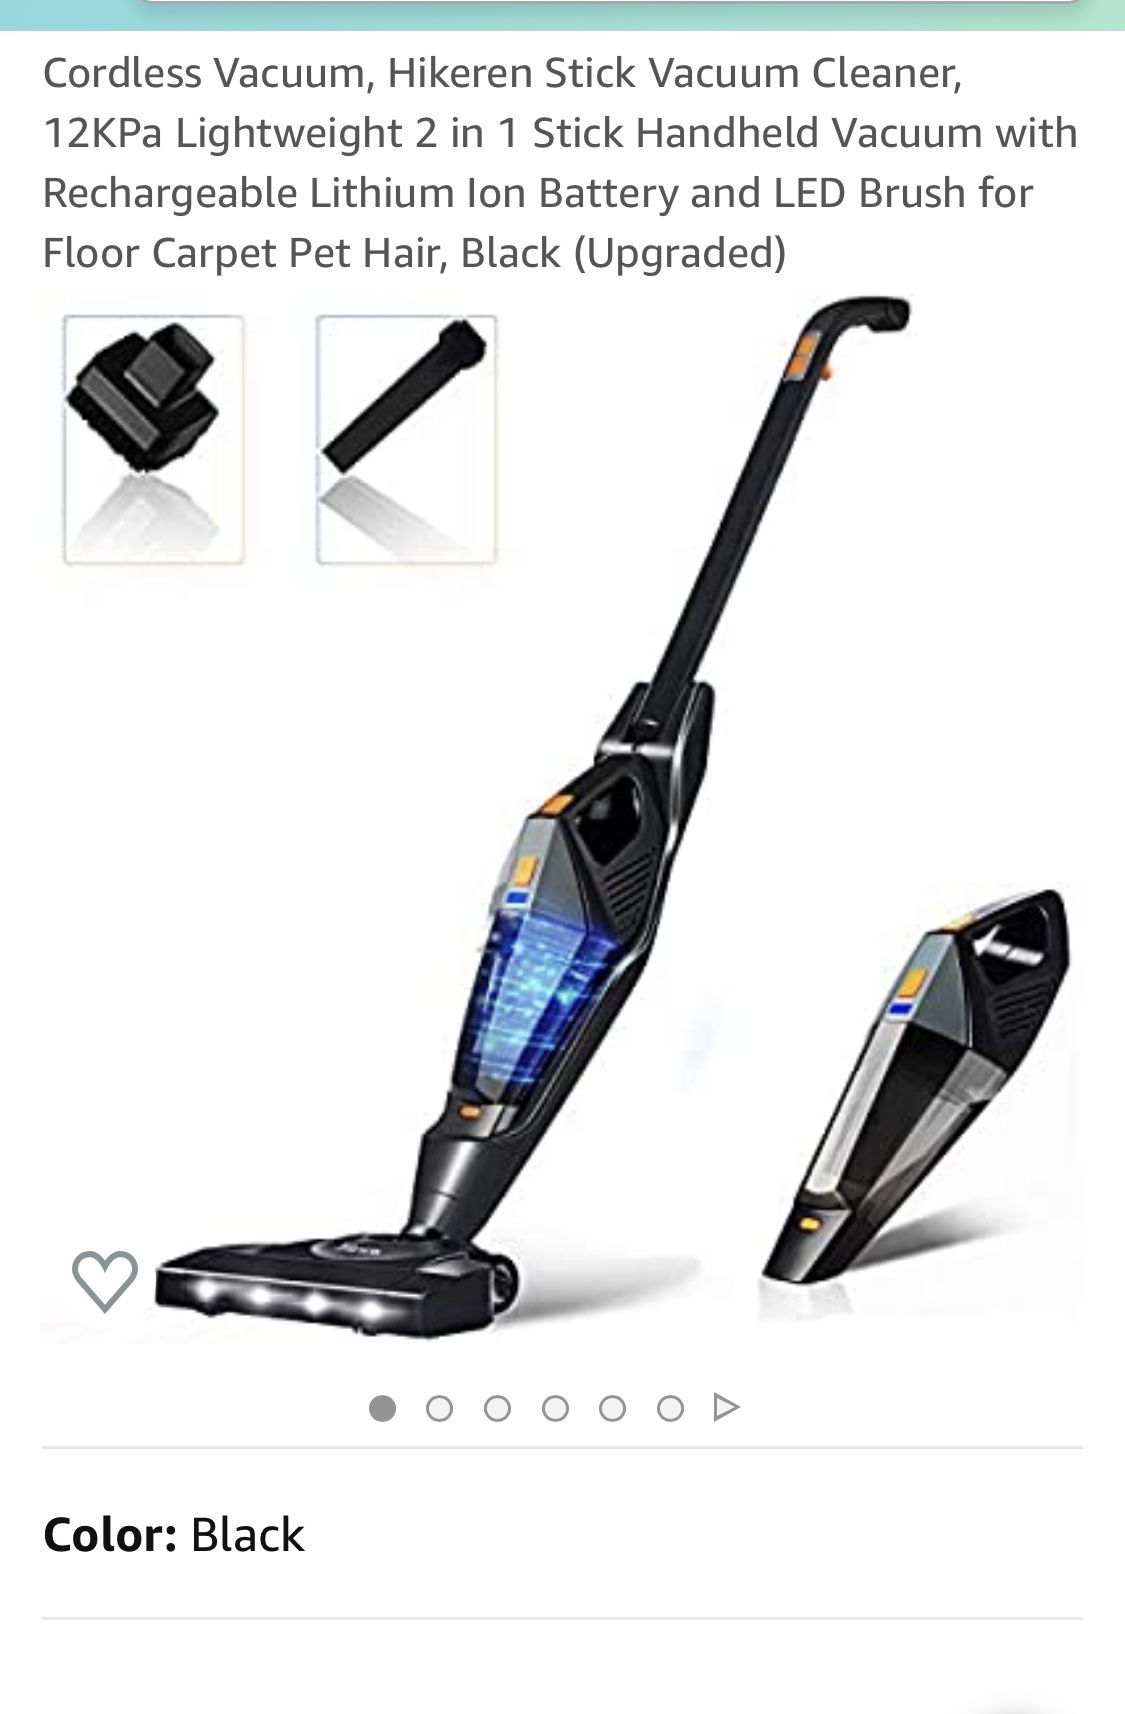 Brand new Cordless vacuum